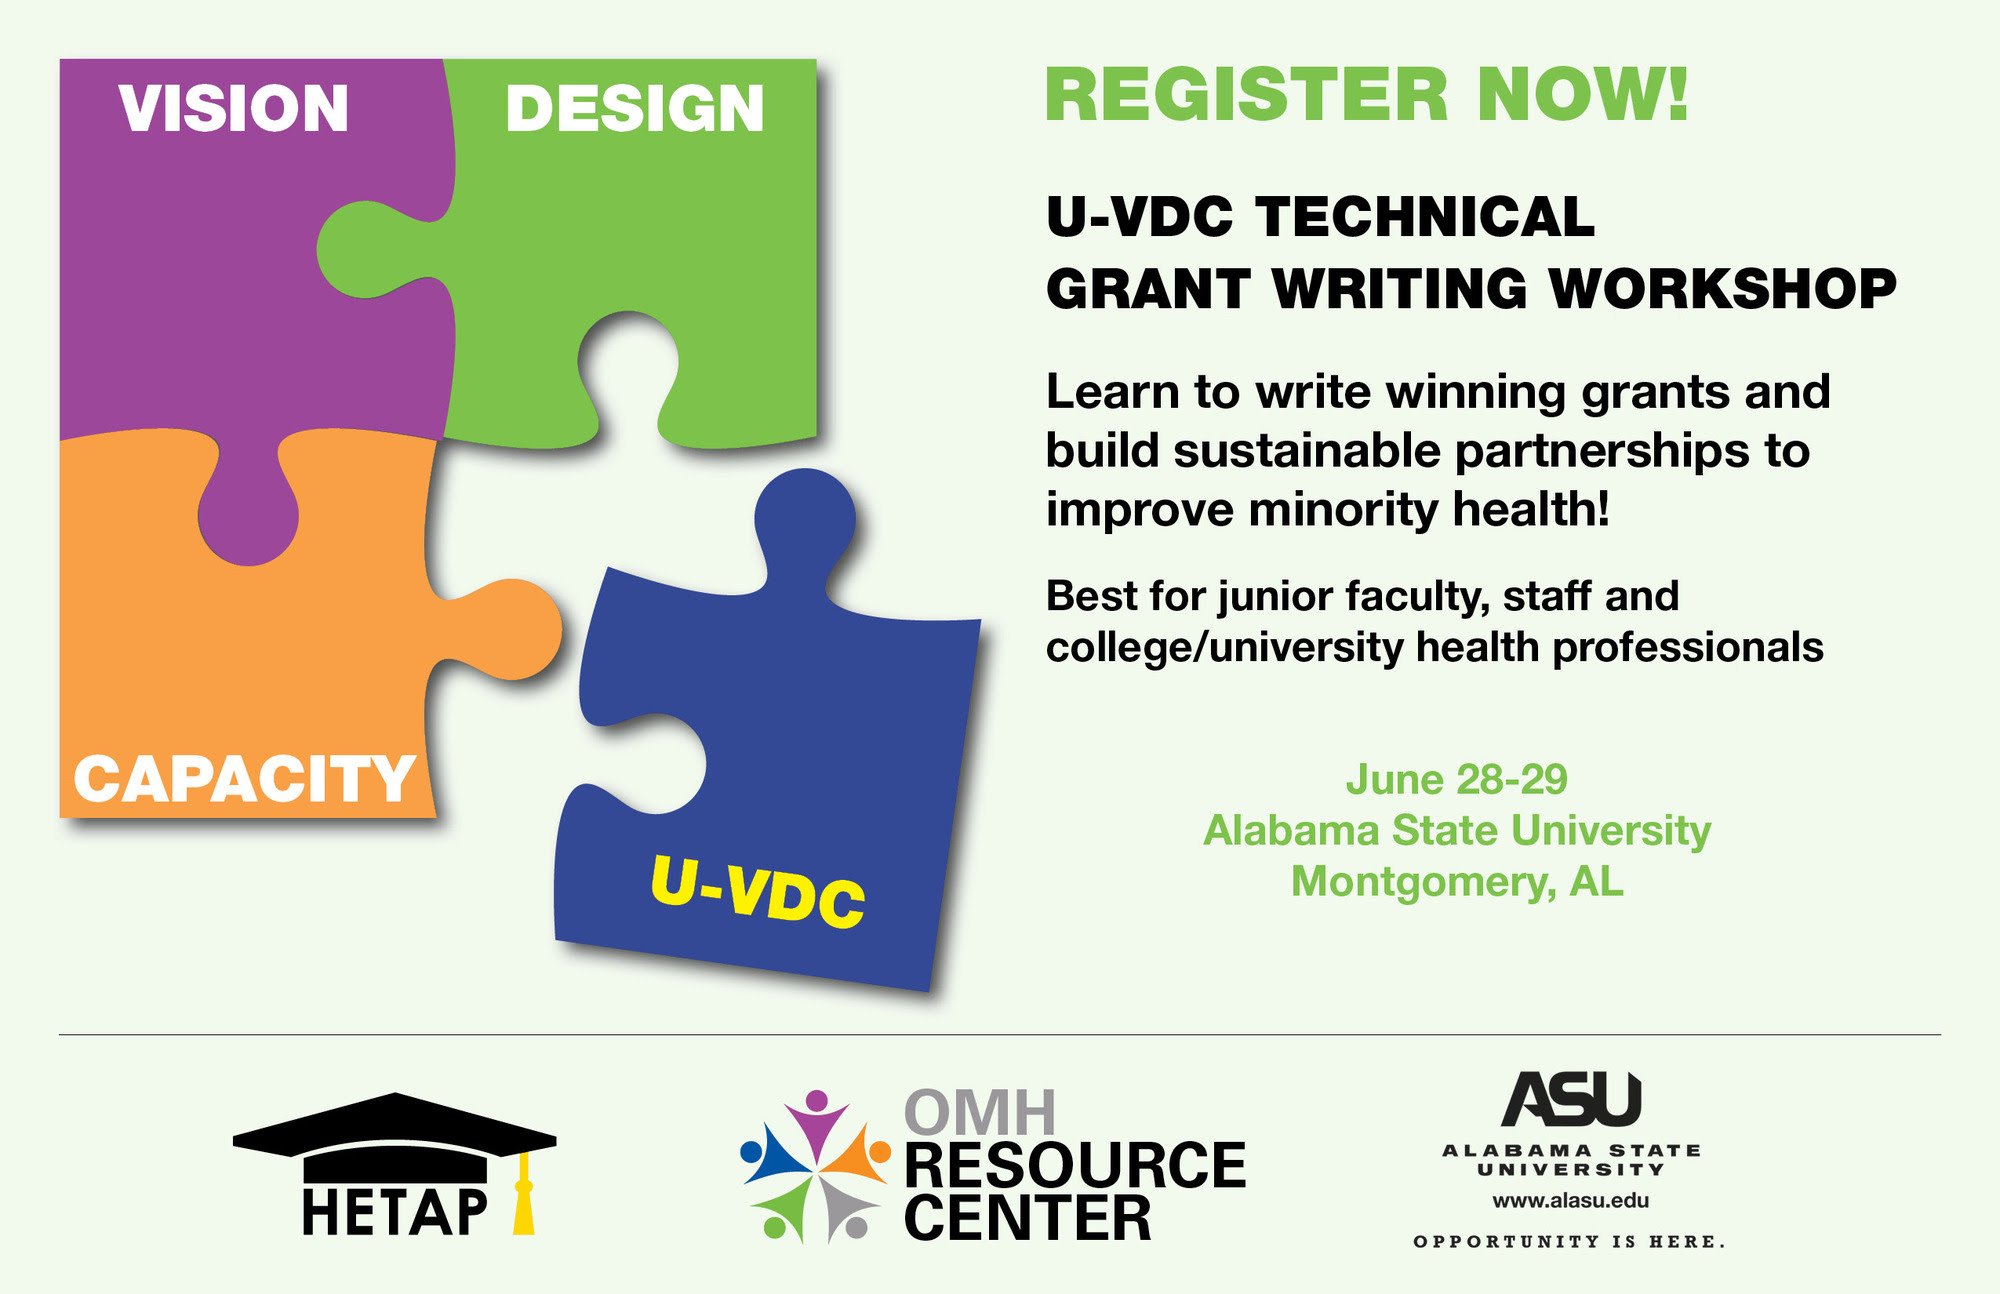 Vision Design Capacity U-VDC Technical Grant Writing Workshop June 28-29 Alabama State University Montgomery AL  Click to Register Now